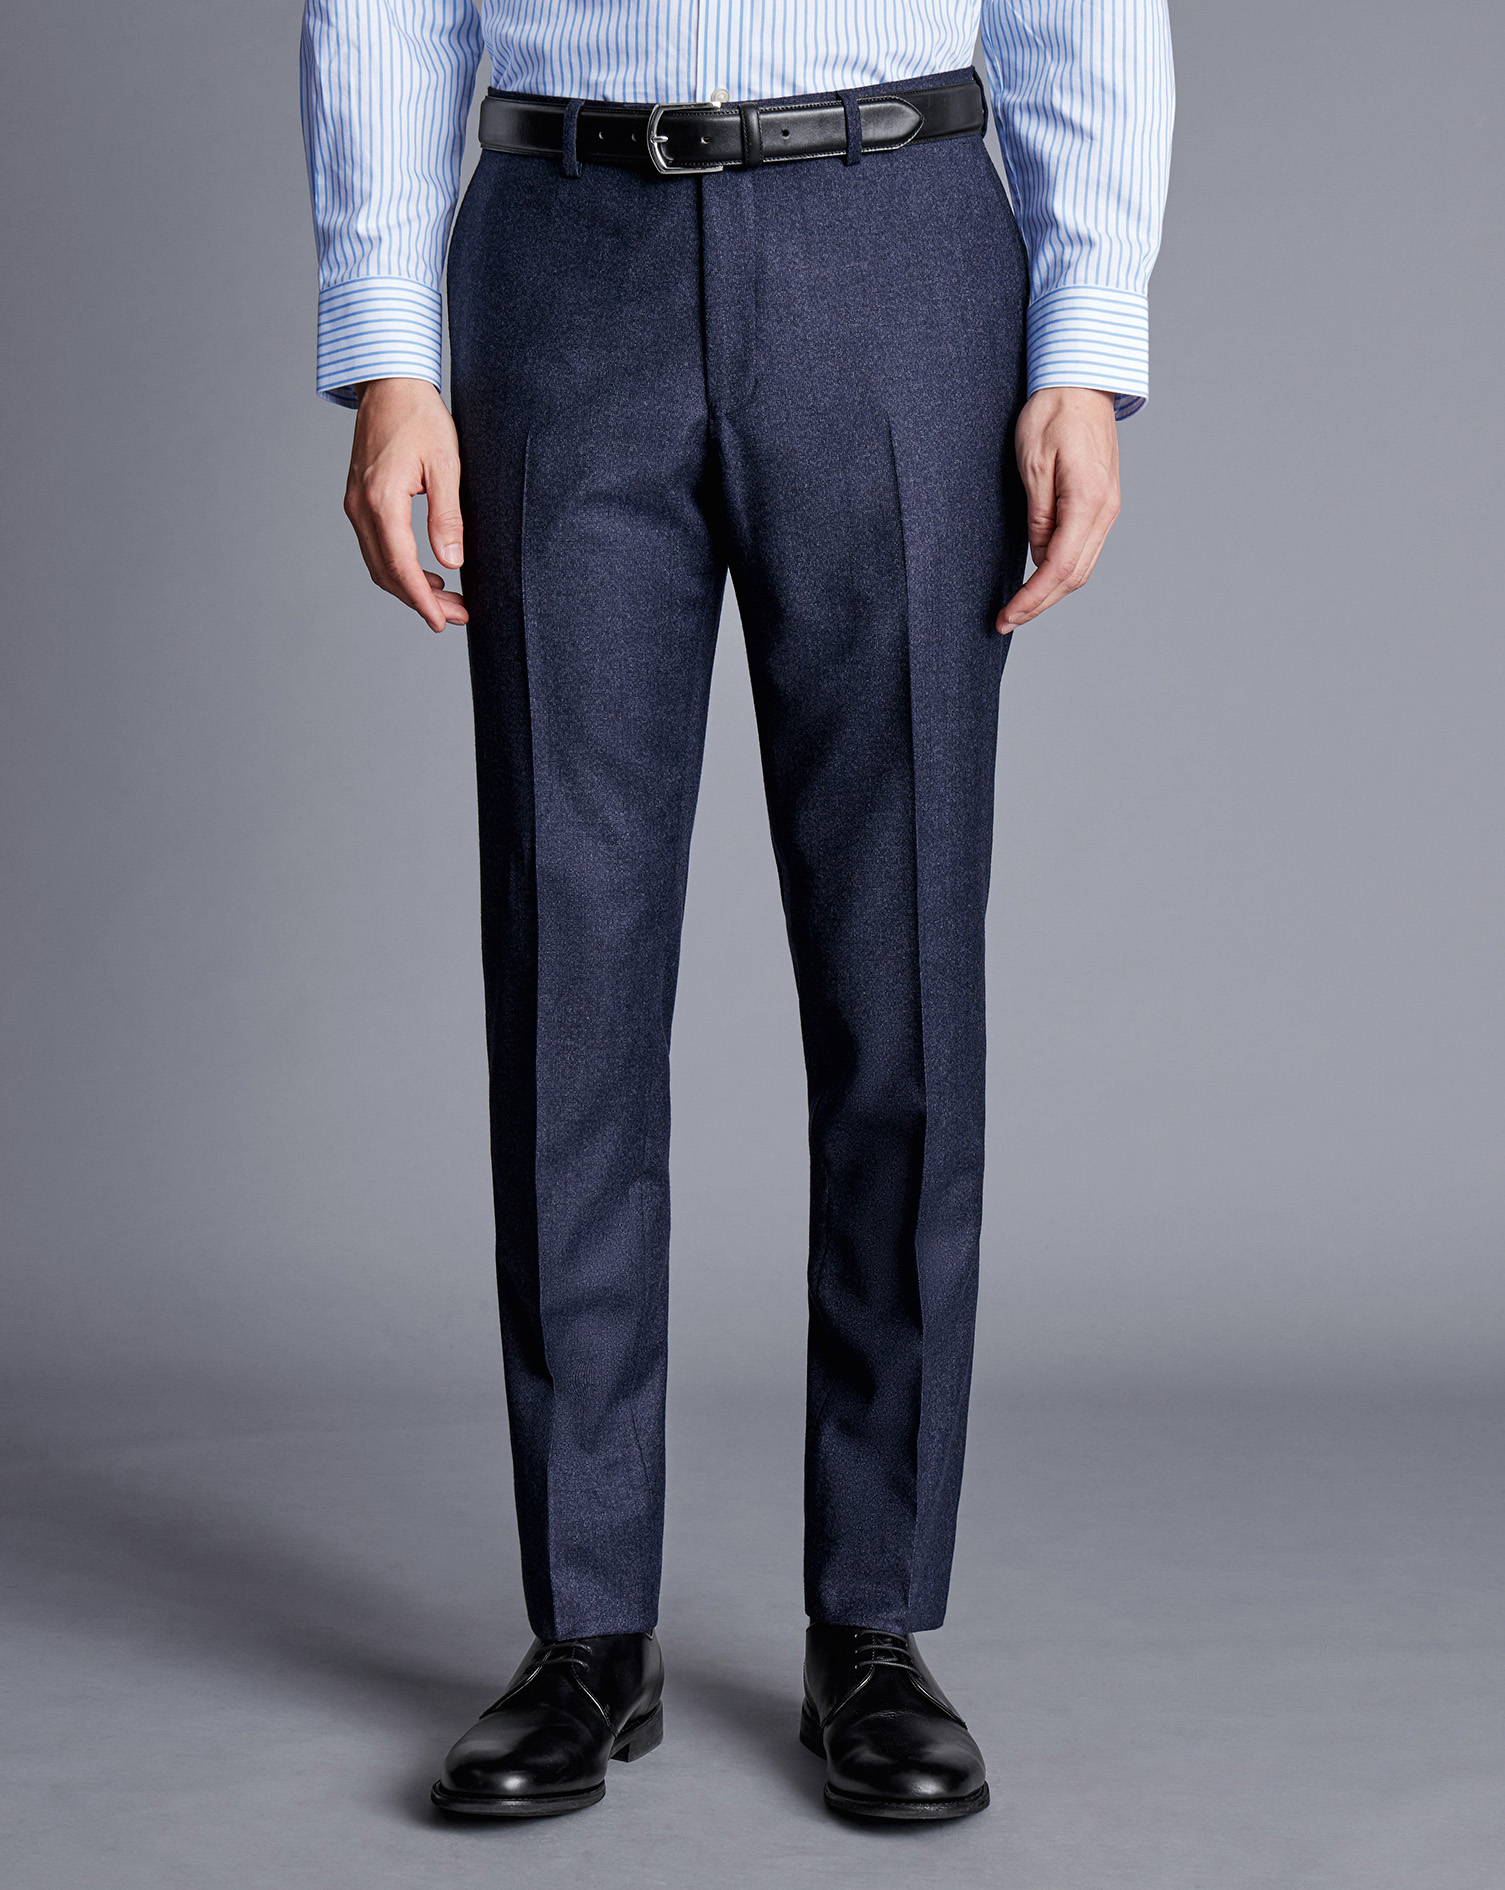 Men's Charles Tyrwhitt Italian Pindot Suit Trousers - Denim Blue Size 34/32 Wool
